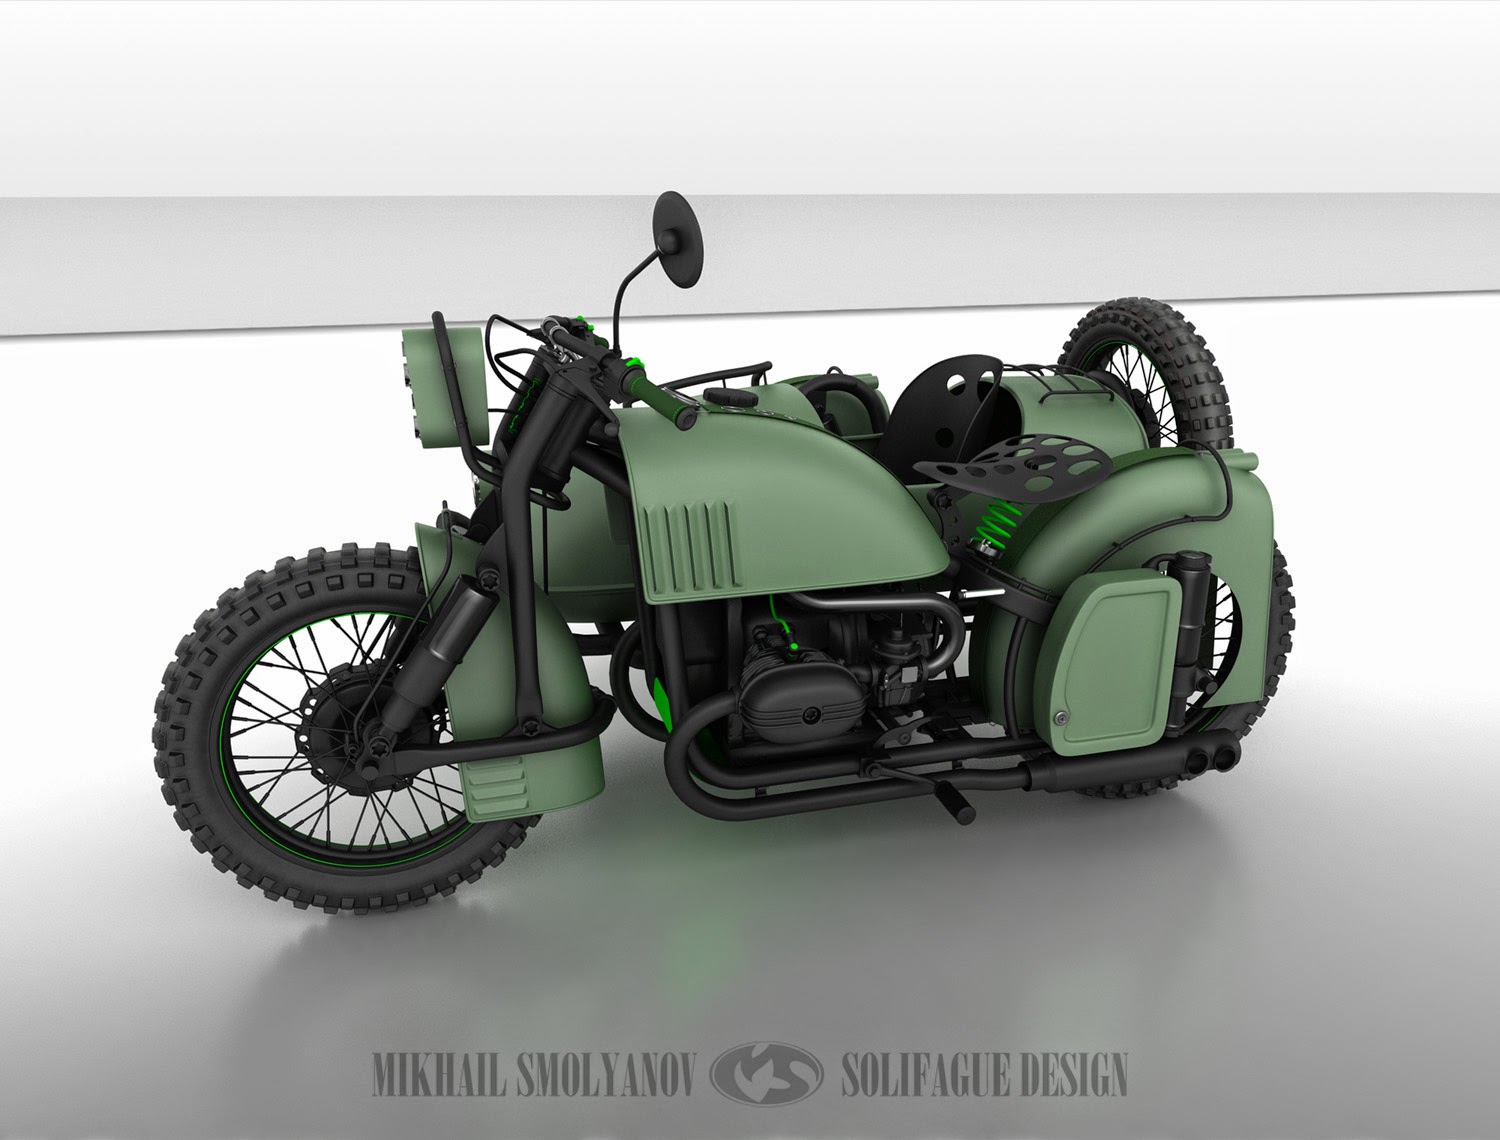 Мотоцикл Урал концепт